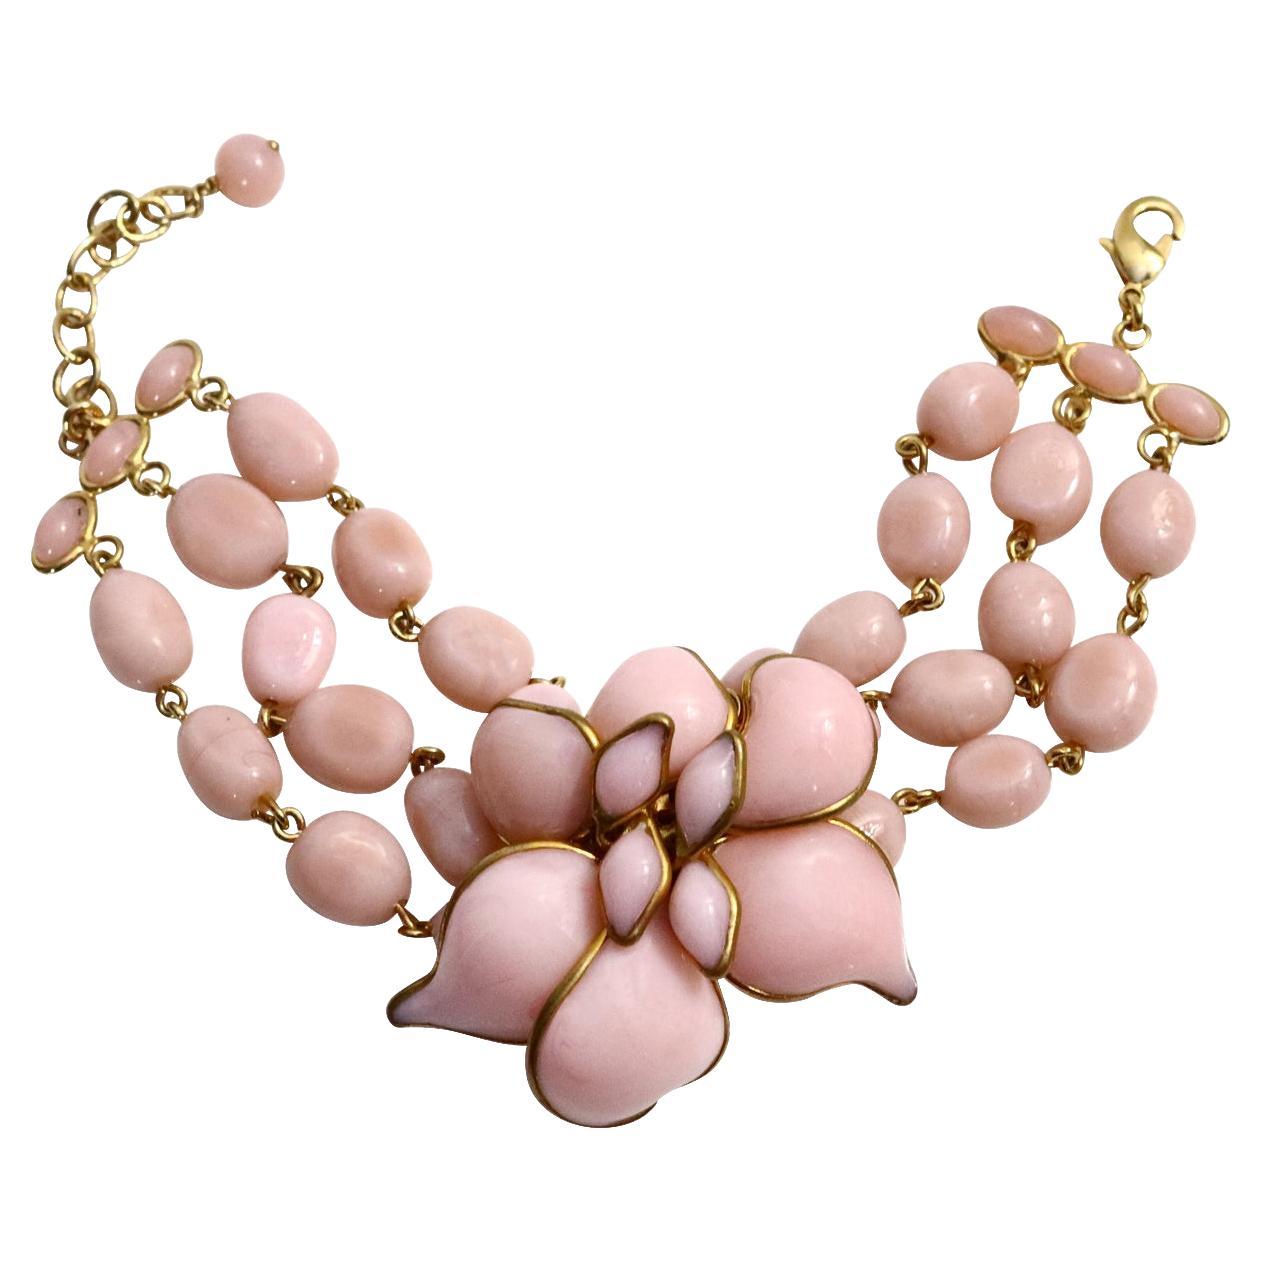 Collectible Augustine Gold Tone Pink Flower Pate De Verre Bracelet Circa 2000s